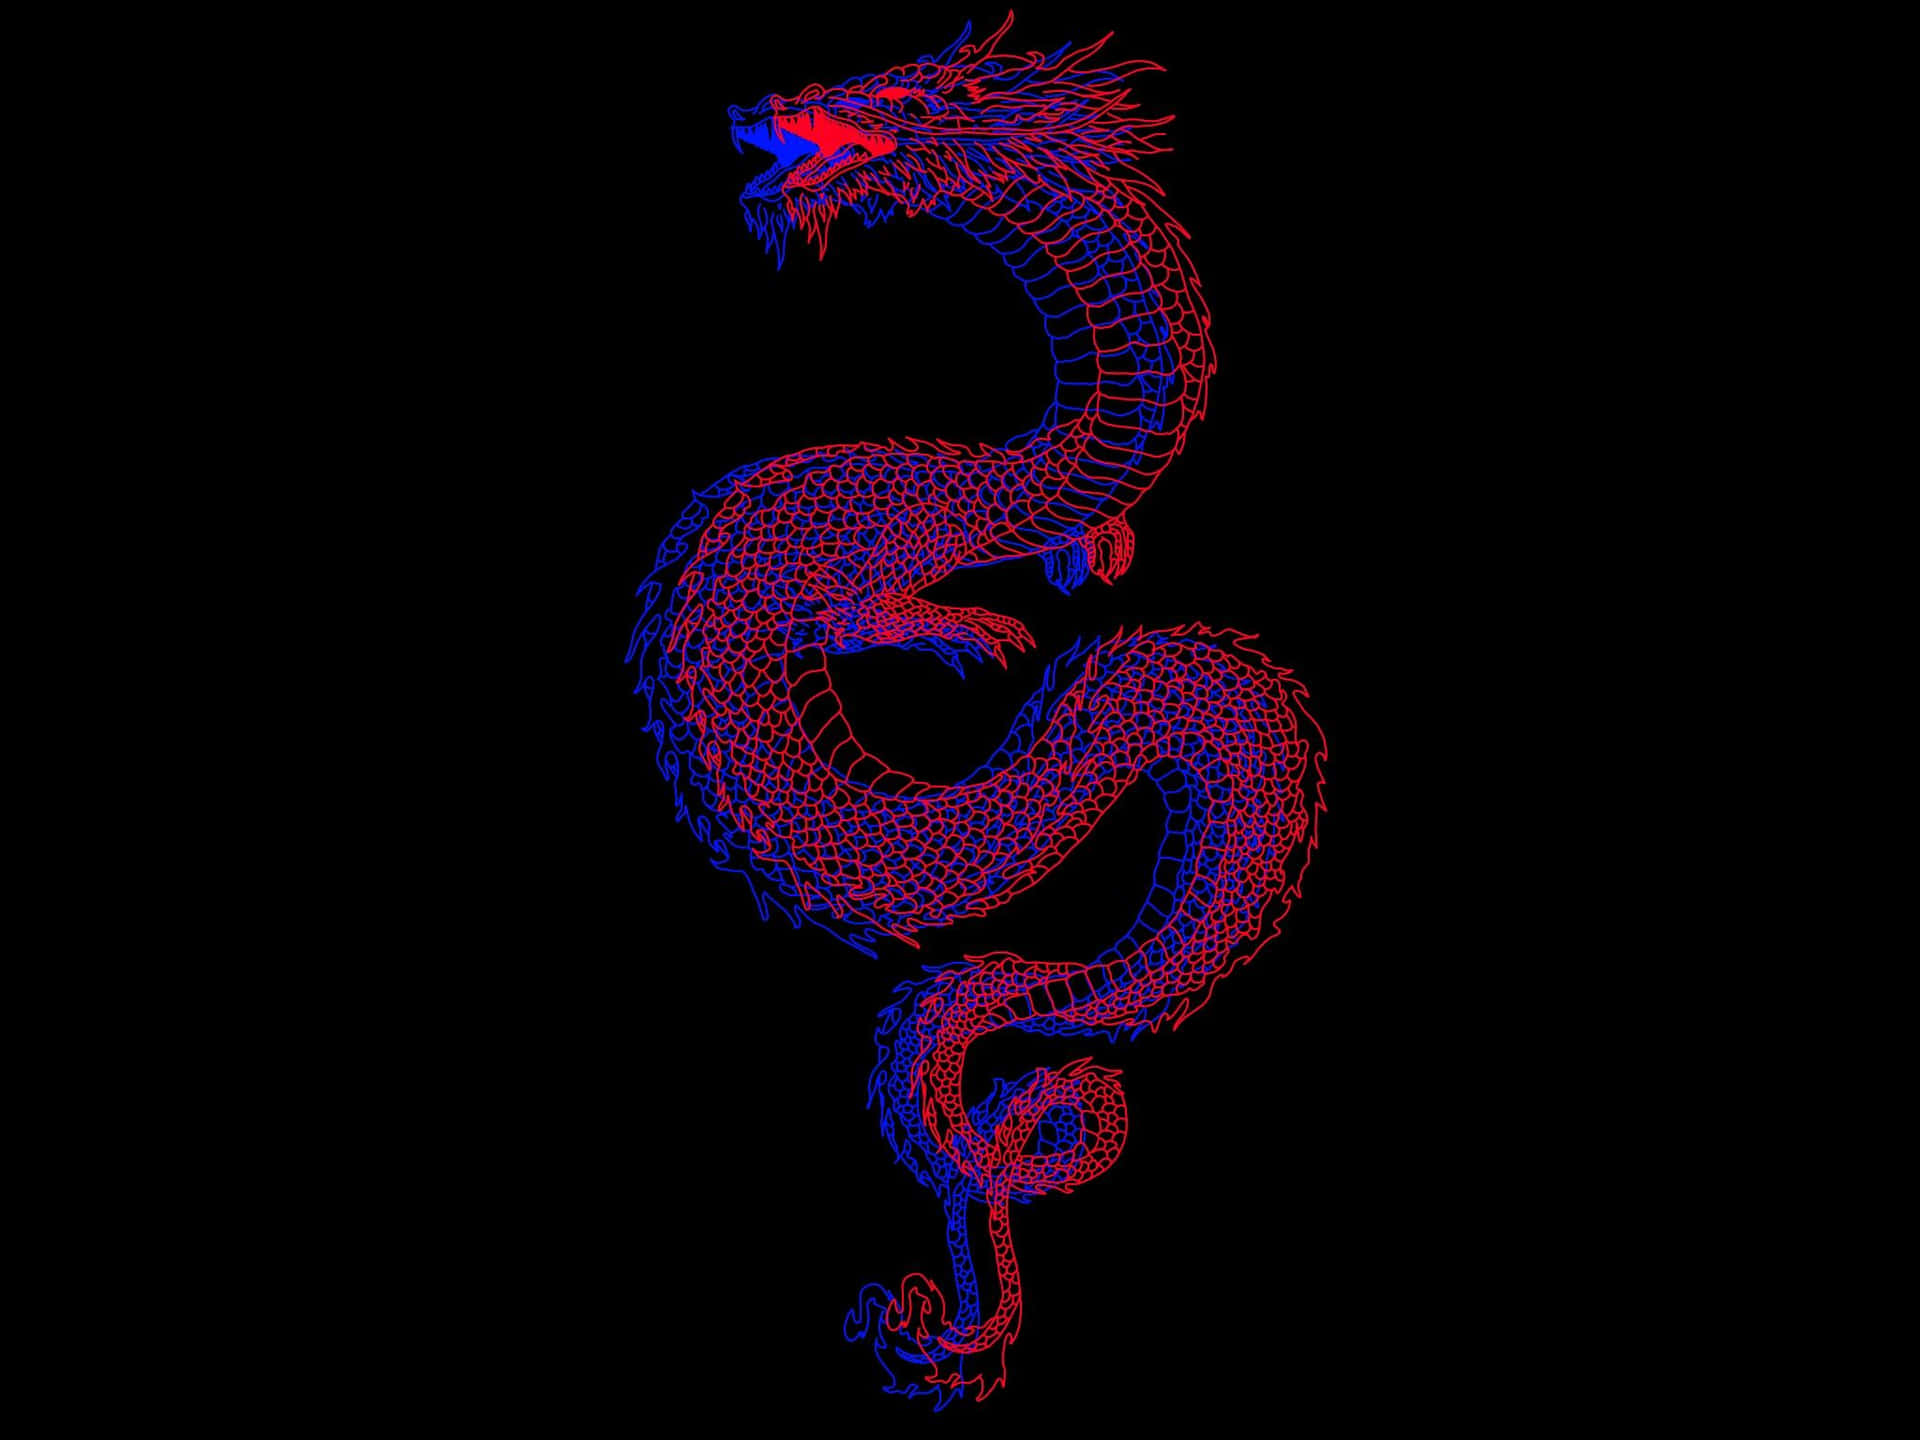 Glitch Dragon Art Dark Aesthetic.jpg Wallpaper